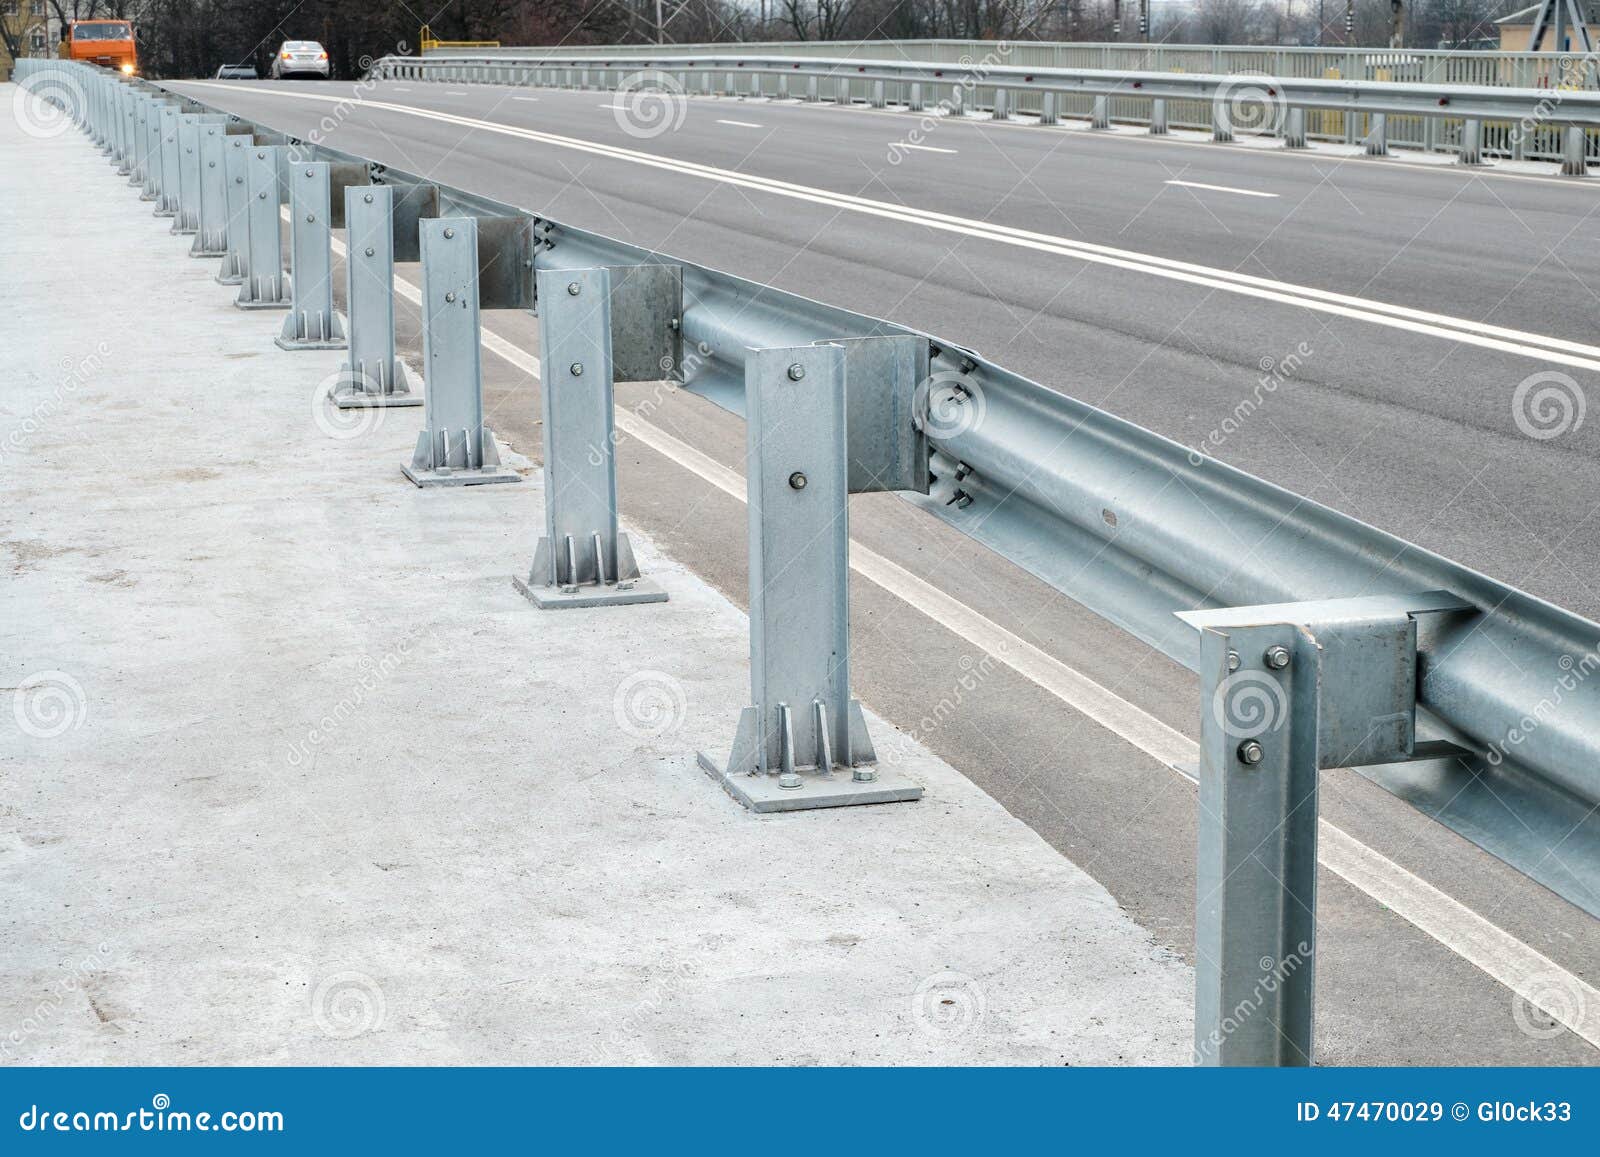 Safety Barrier on Freeway Bridge Stock Image - Image of road, bridge ...